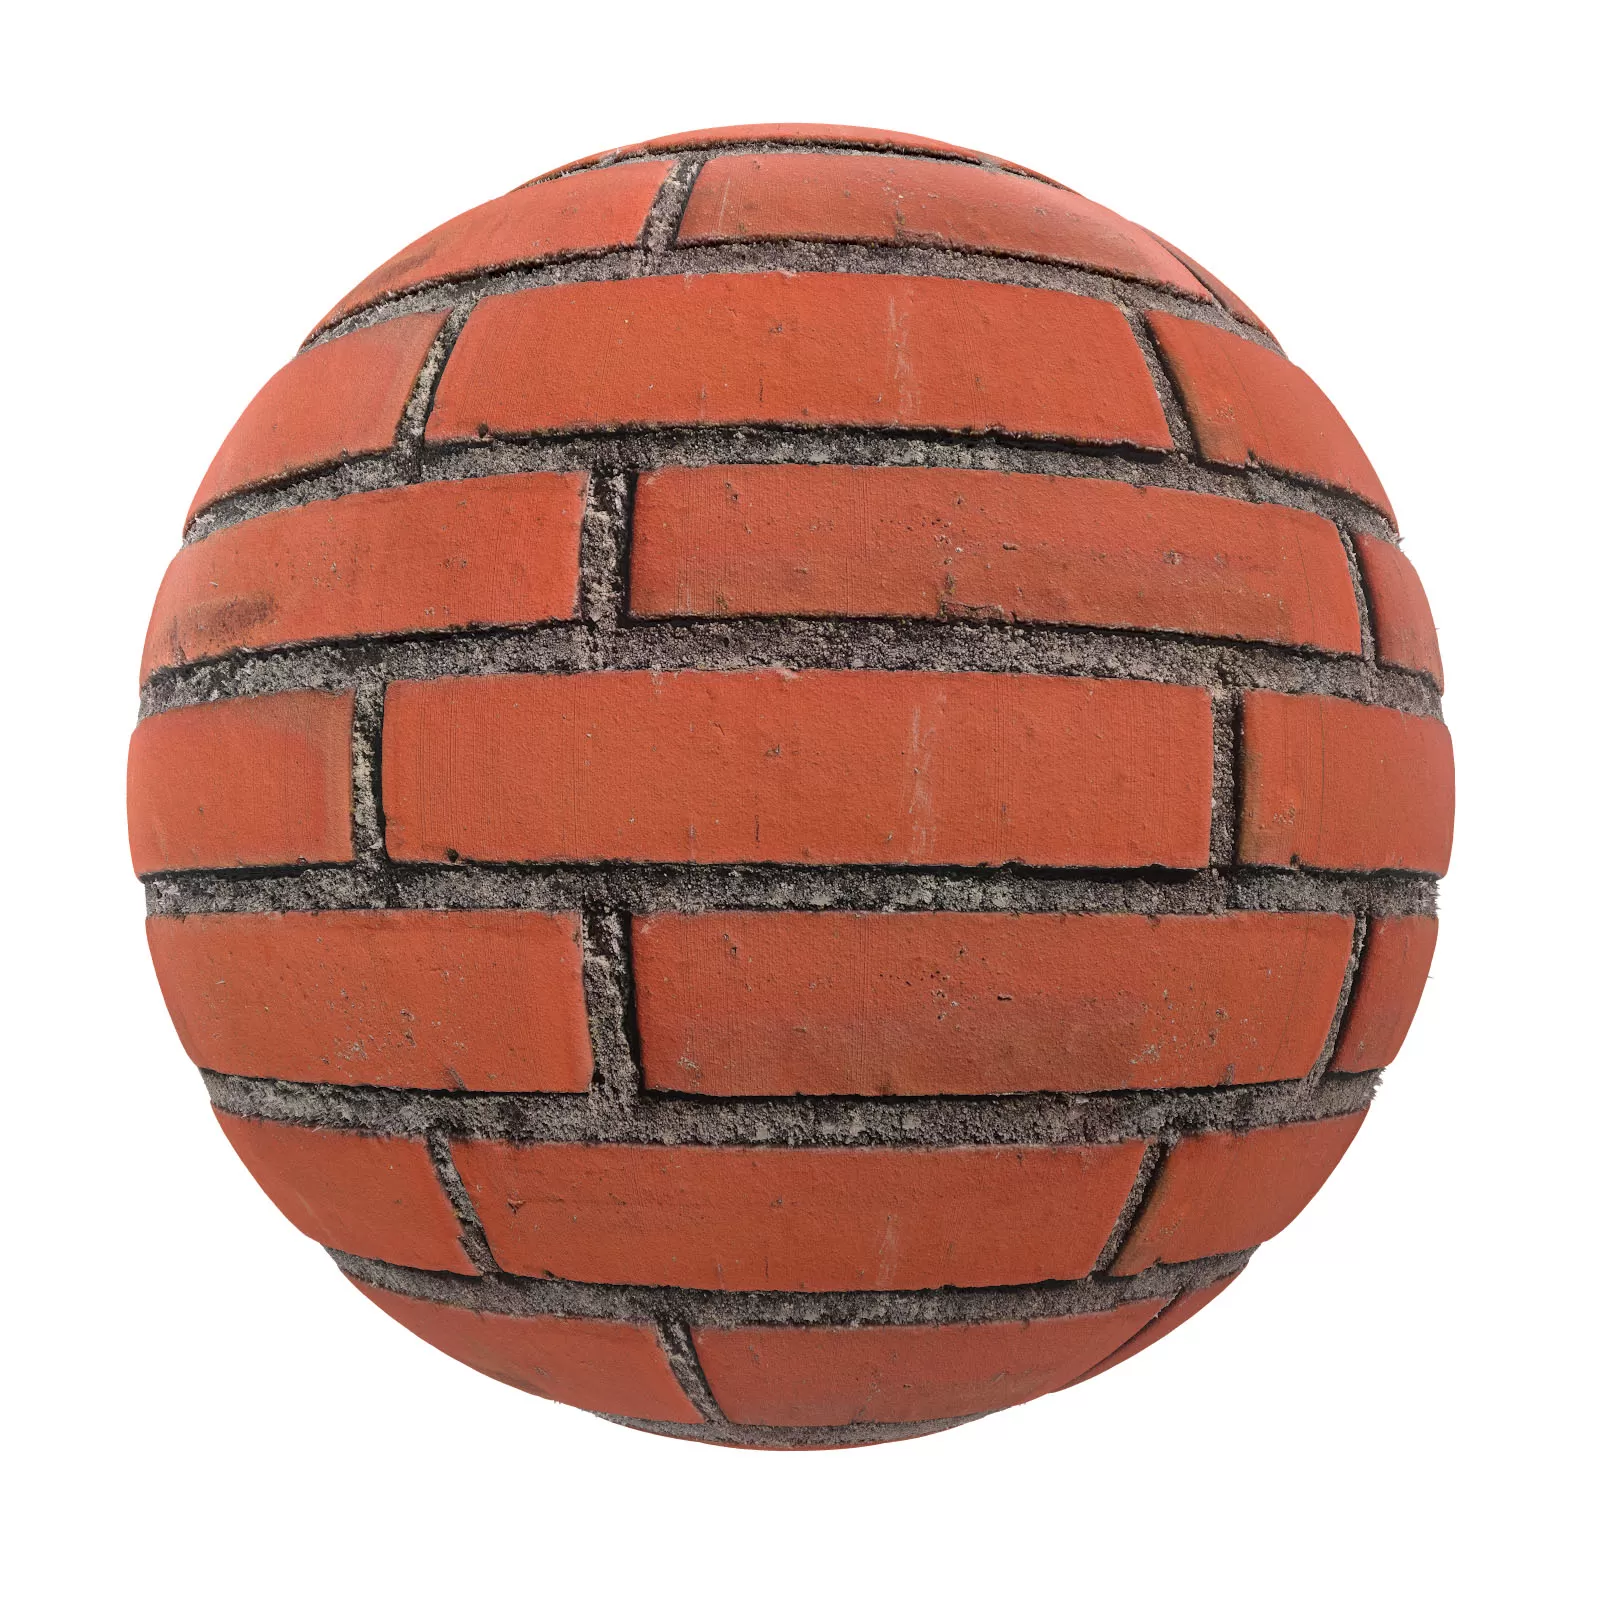 PBR CGAXIS TEXTURES – BRICK – Red Brick Wall 21